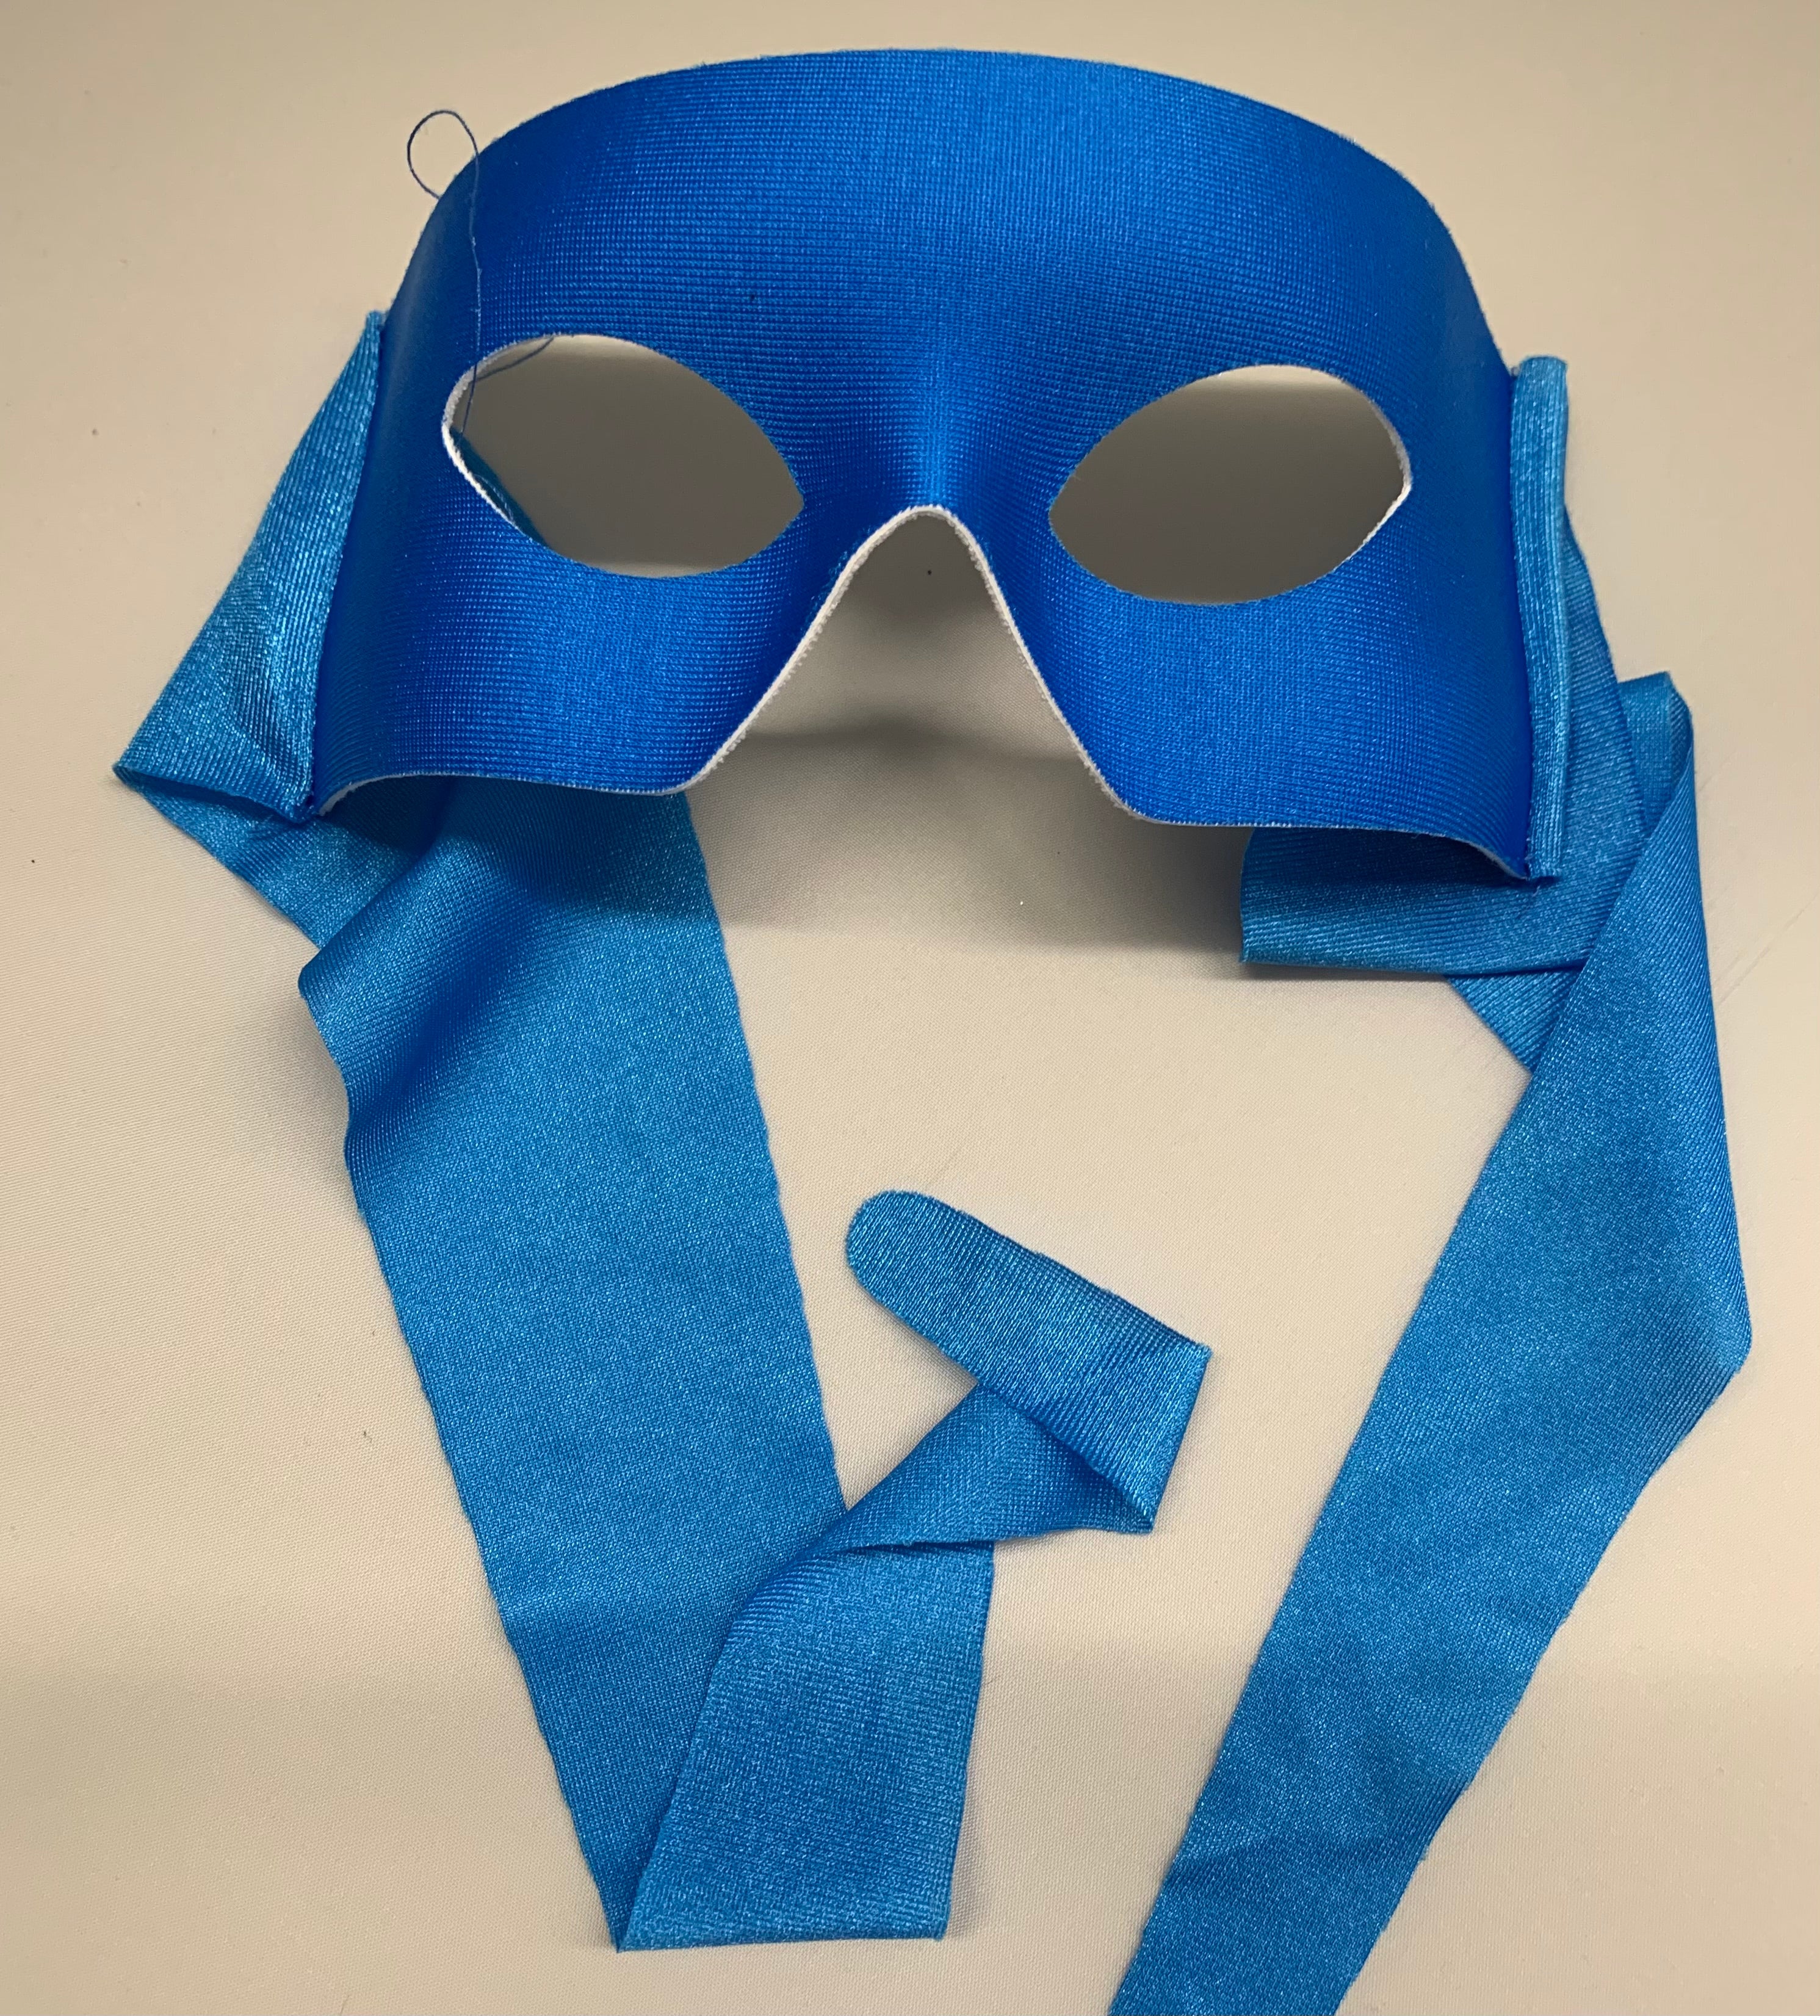 Italian Super Hero Mask with cloth Ties - Blue